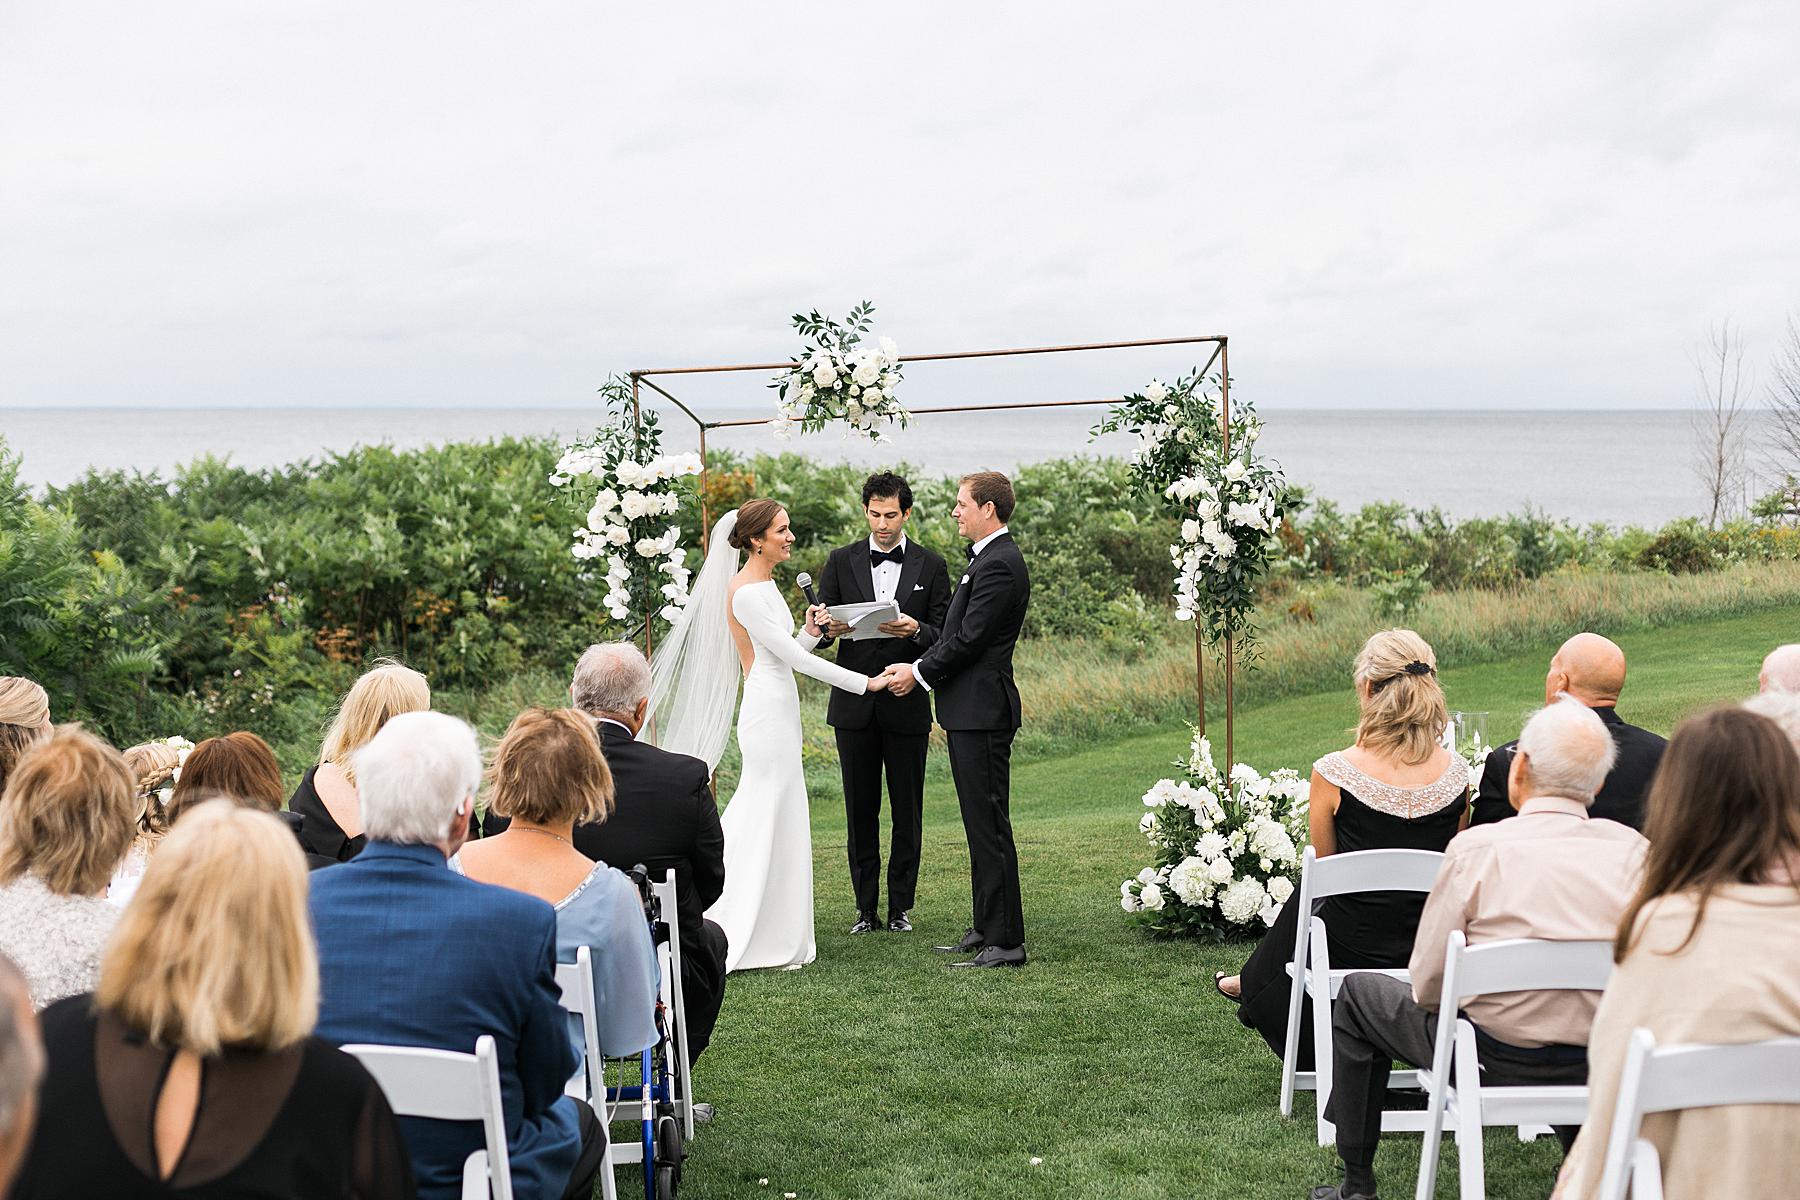 wedding ceremony at horseshoe bay beach club in door county, outdoors overlooking lake michigan in wisconsin